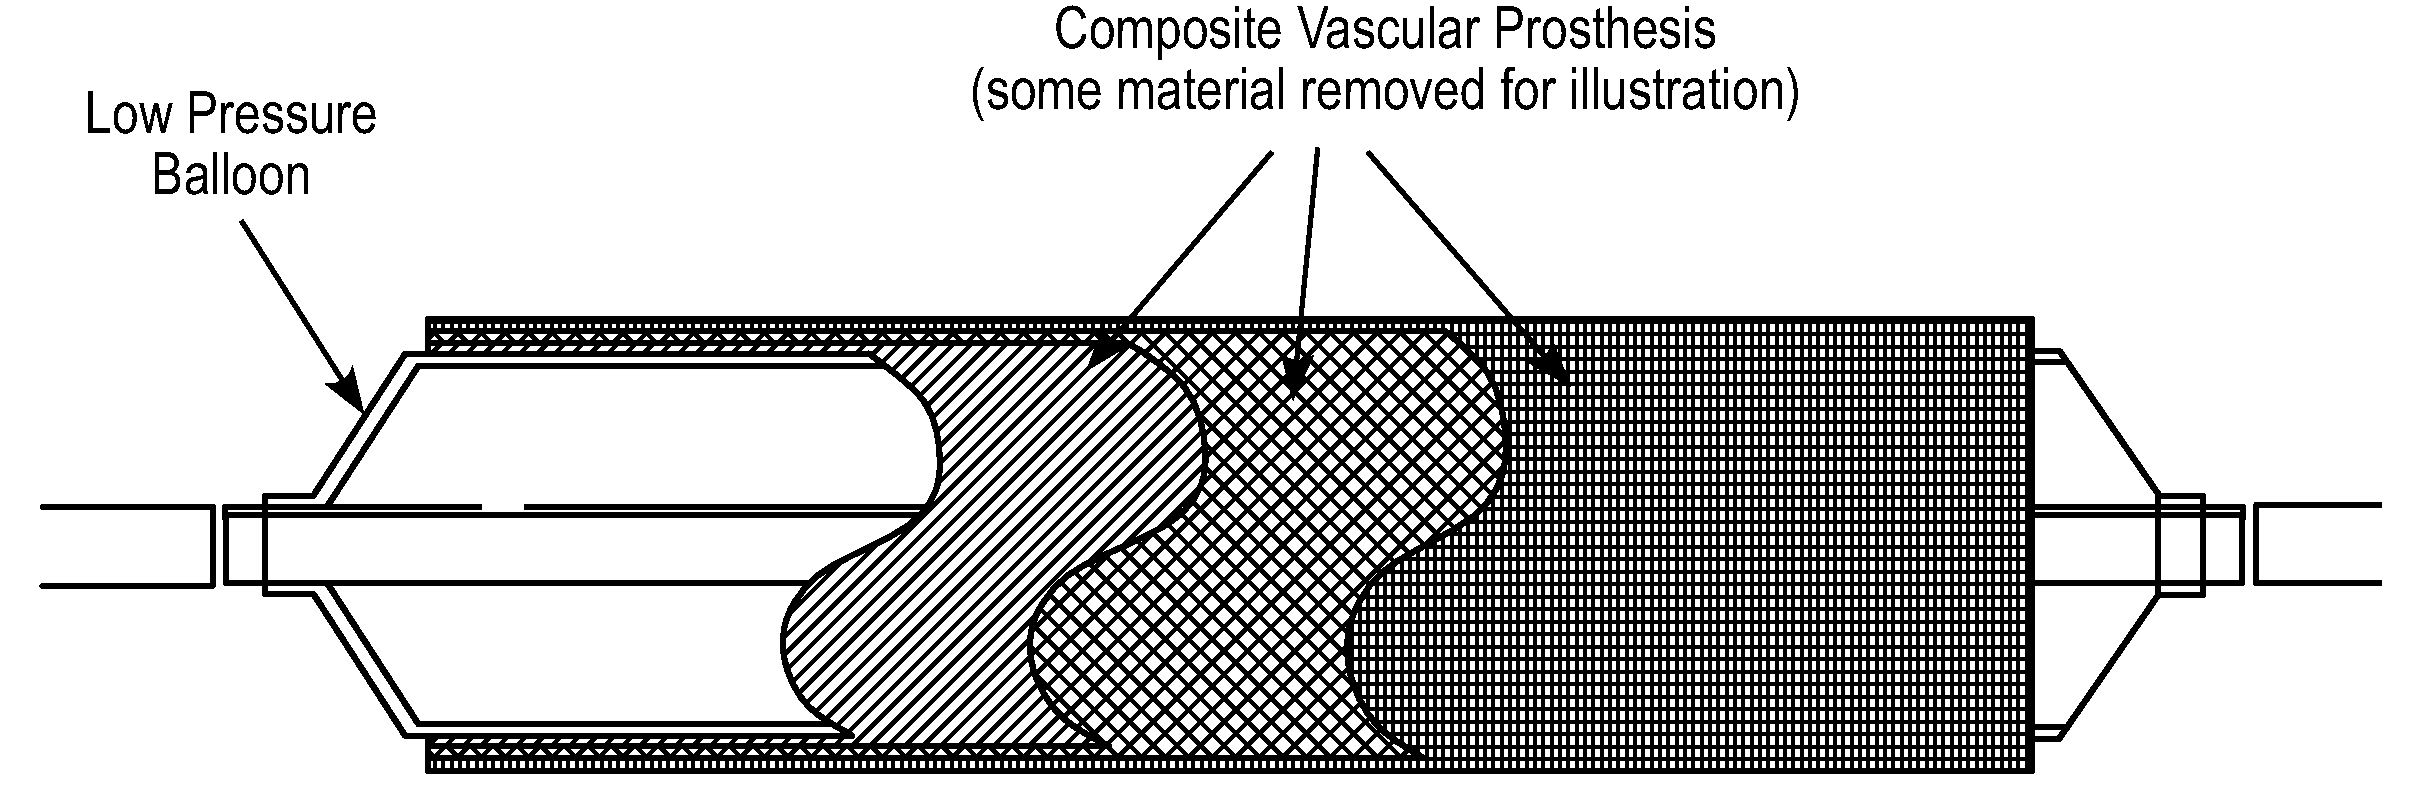 Composite Vascular Prosthesis